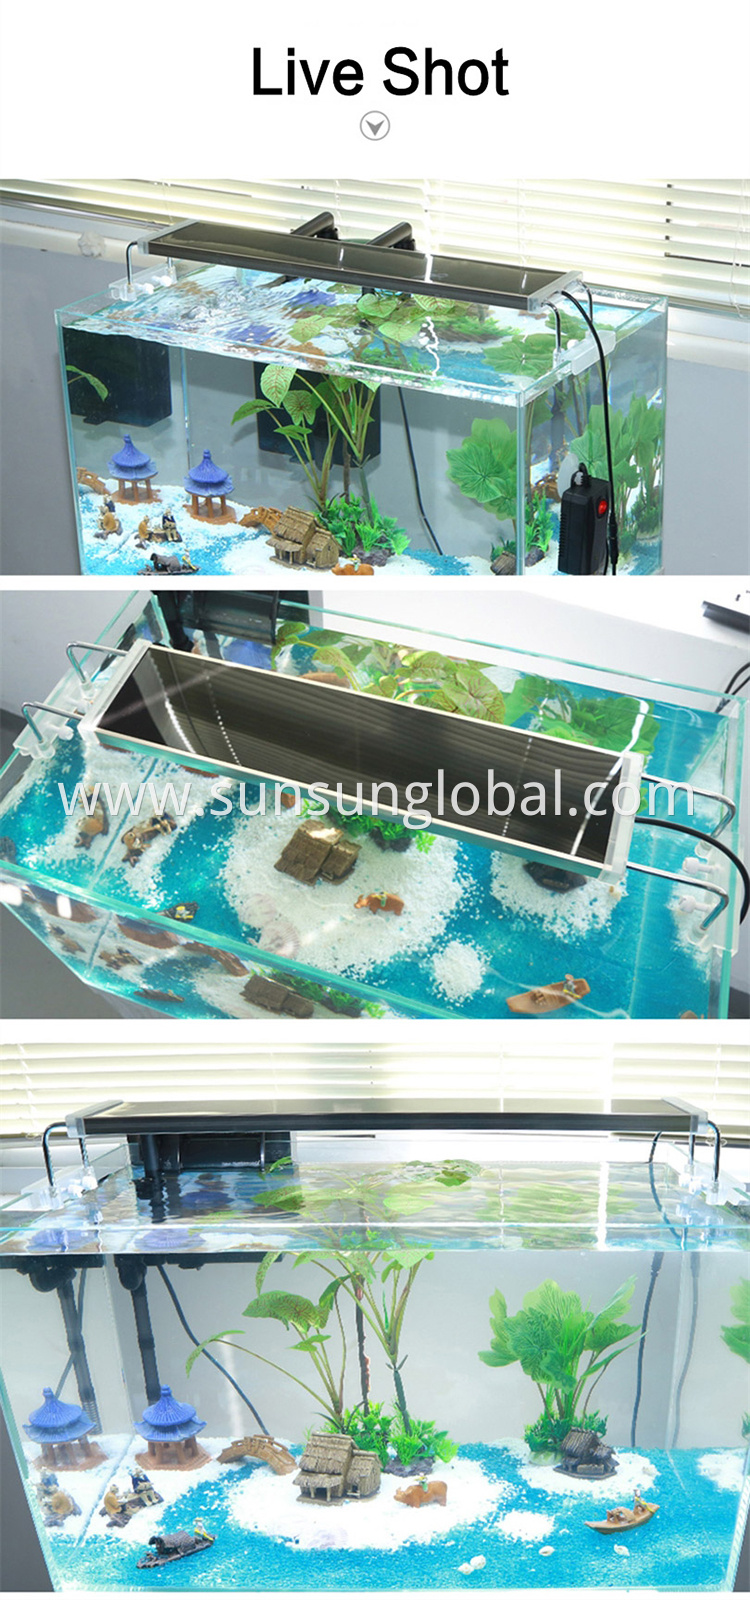 Good Quality Safely 120cm Led Aquarium Light